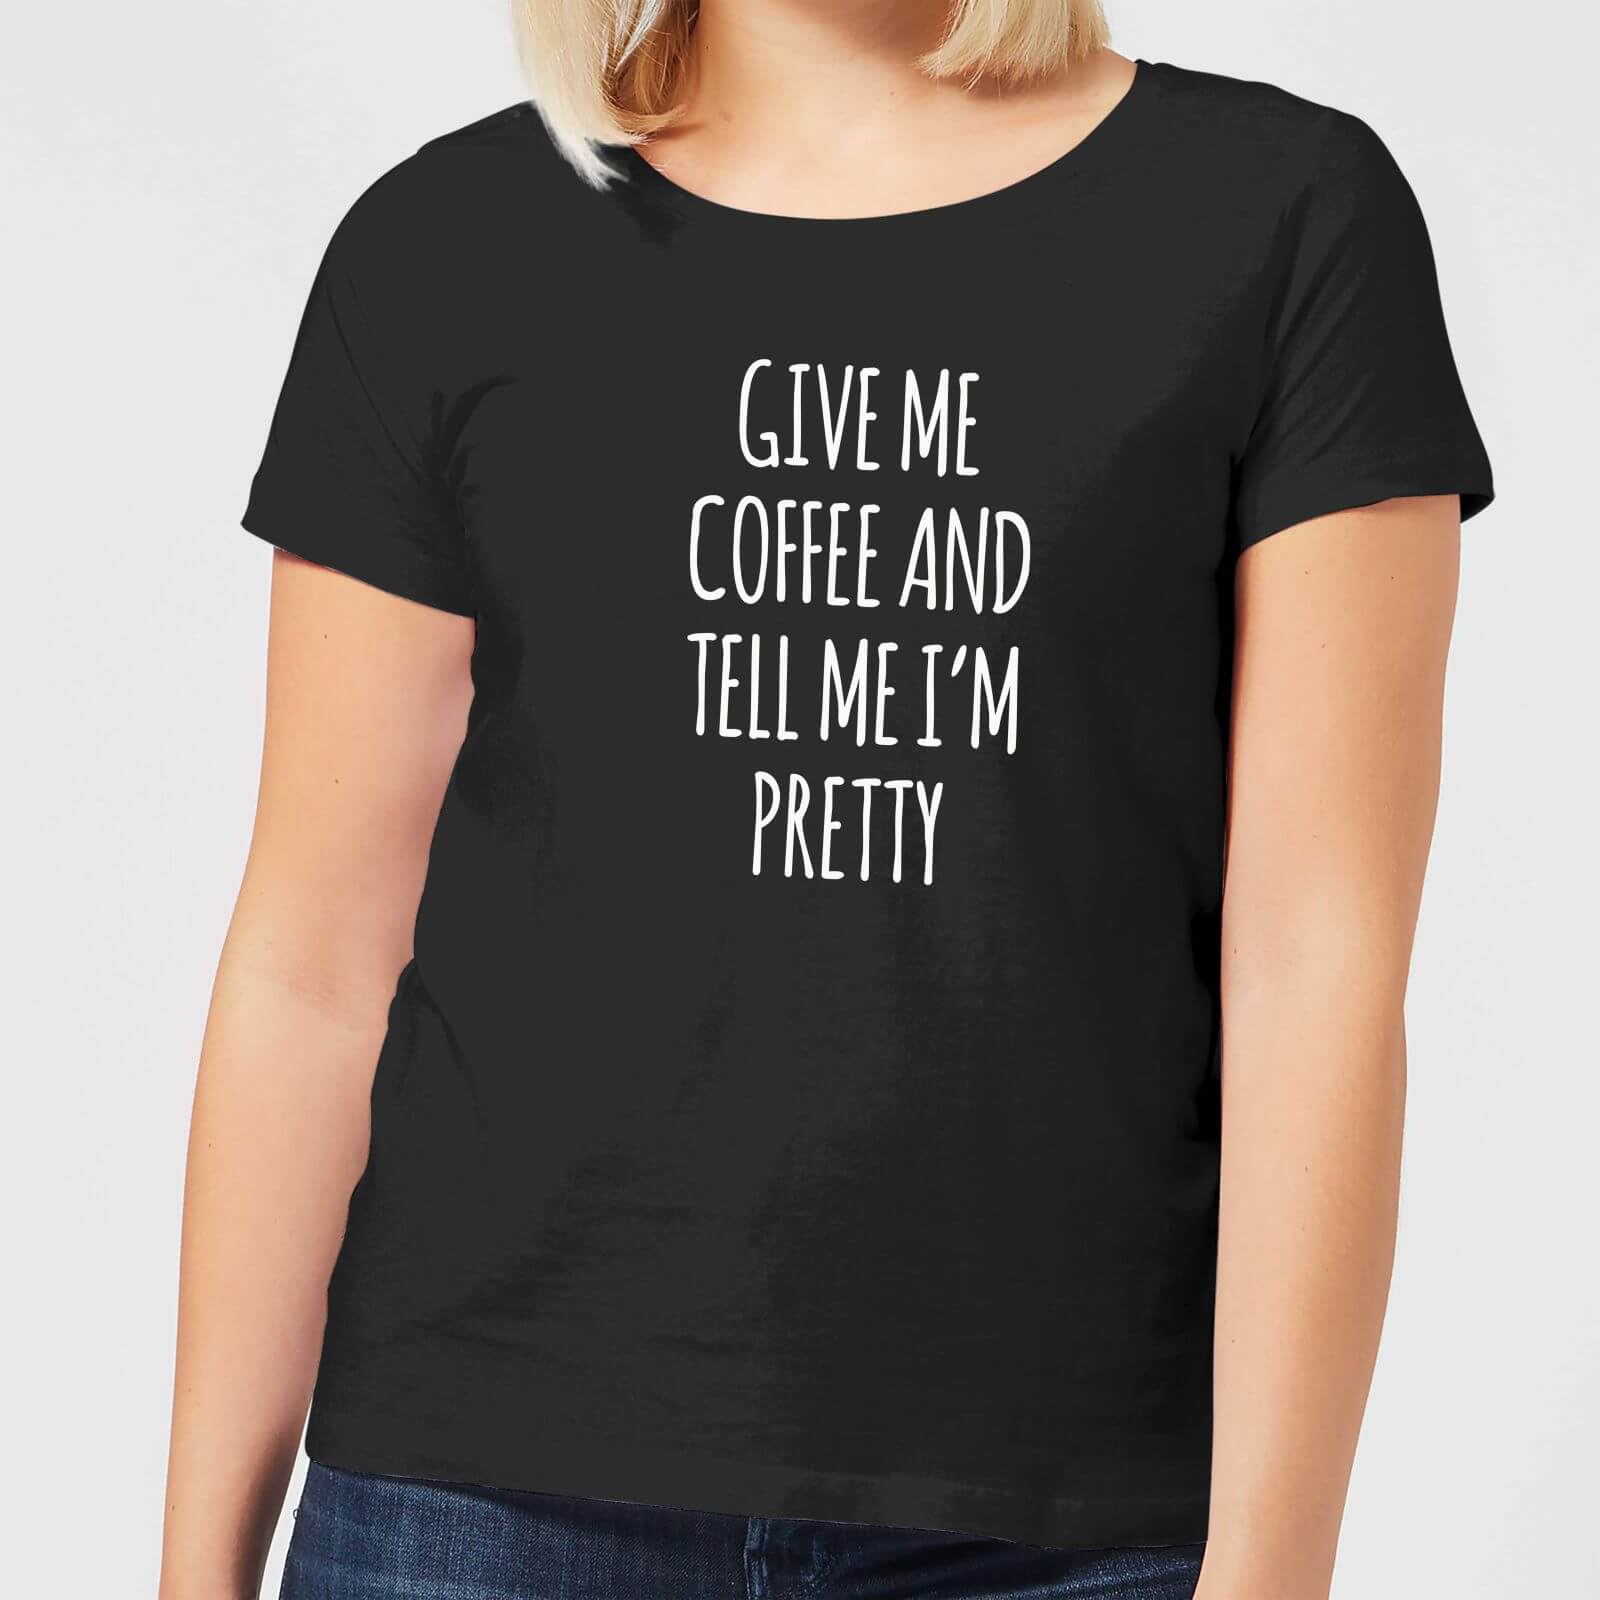 Give me Coffee and Tell me I'm Pretty Women's T-Shirt - Black - L - Black